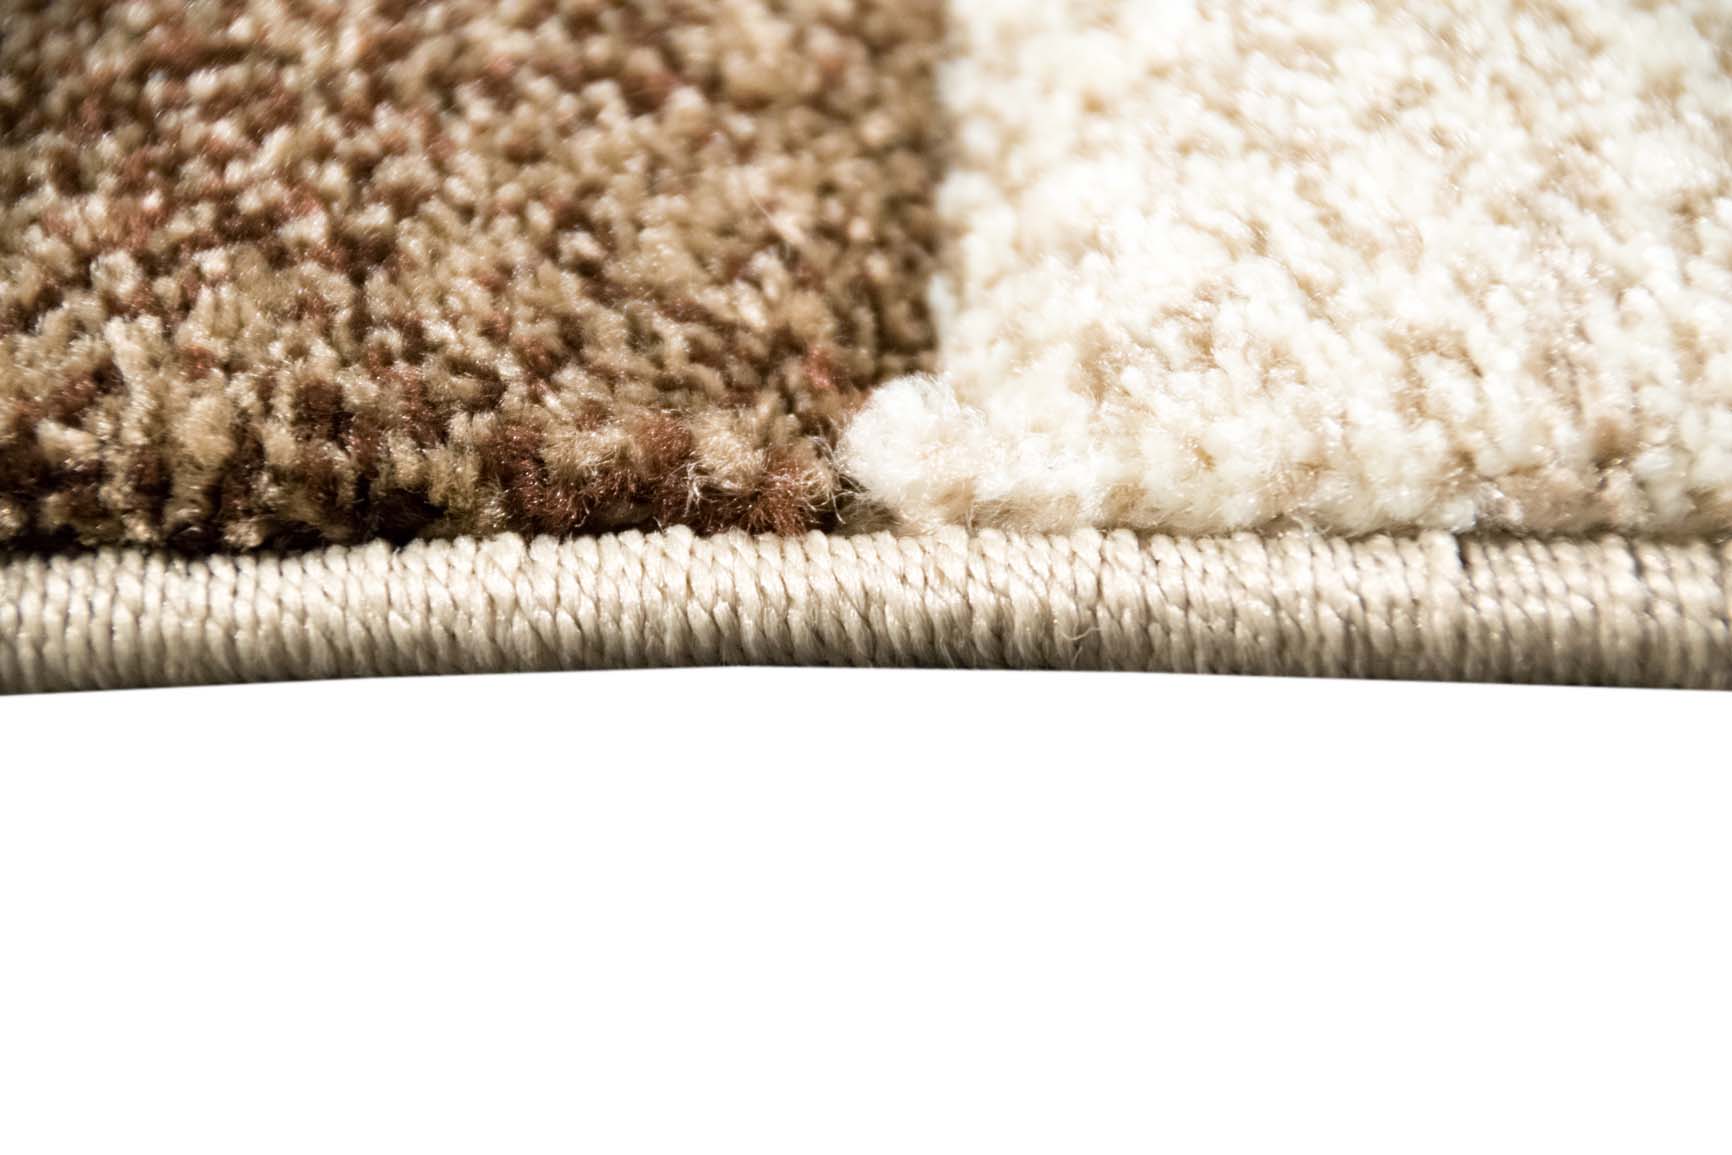 Modern Designer Carpets High Quality And Cheap At Carpet Dreams Teppich Traum